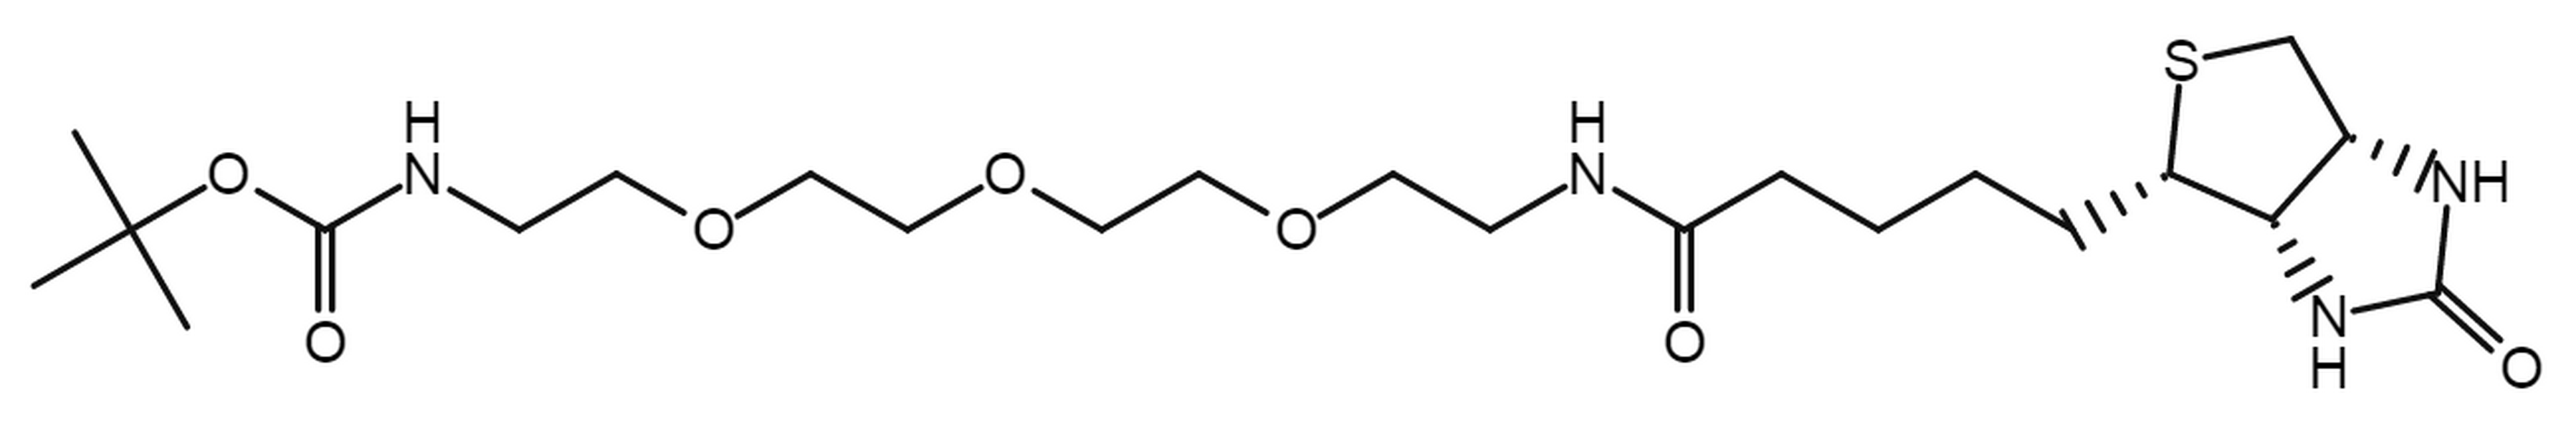 Biotin-PEG3-NHBoc